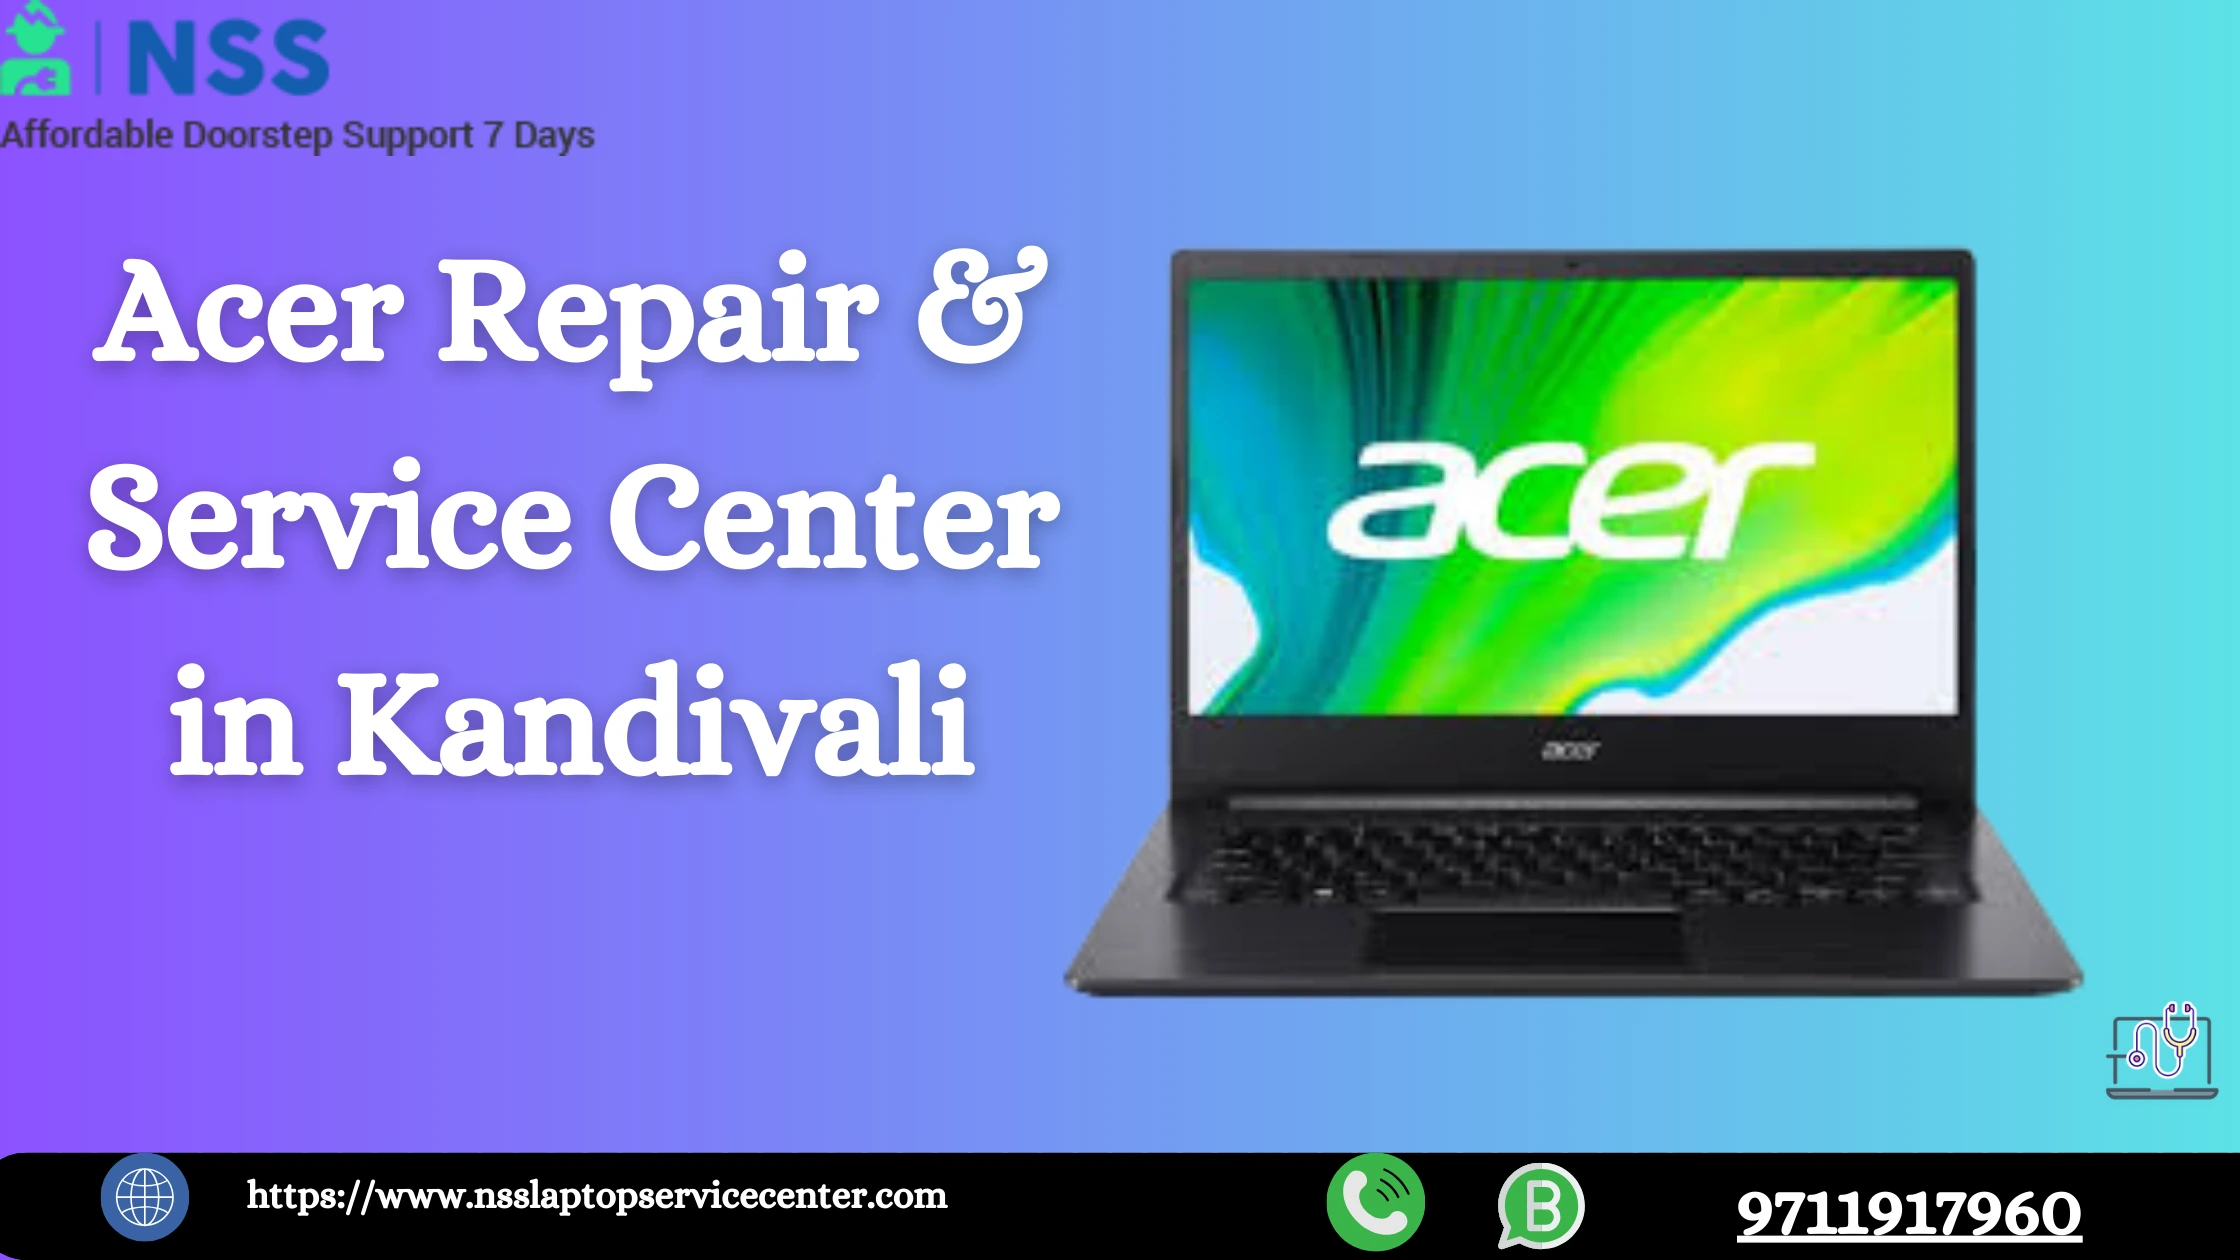 Acer Repair & Service Center in Kandivali, Mumbai